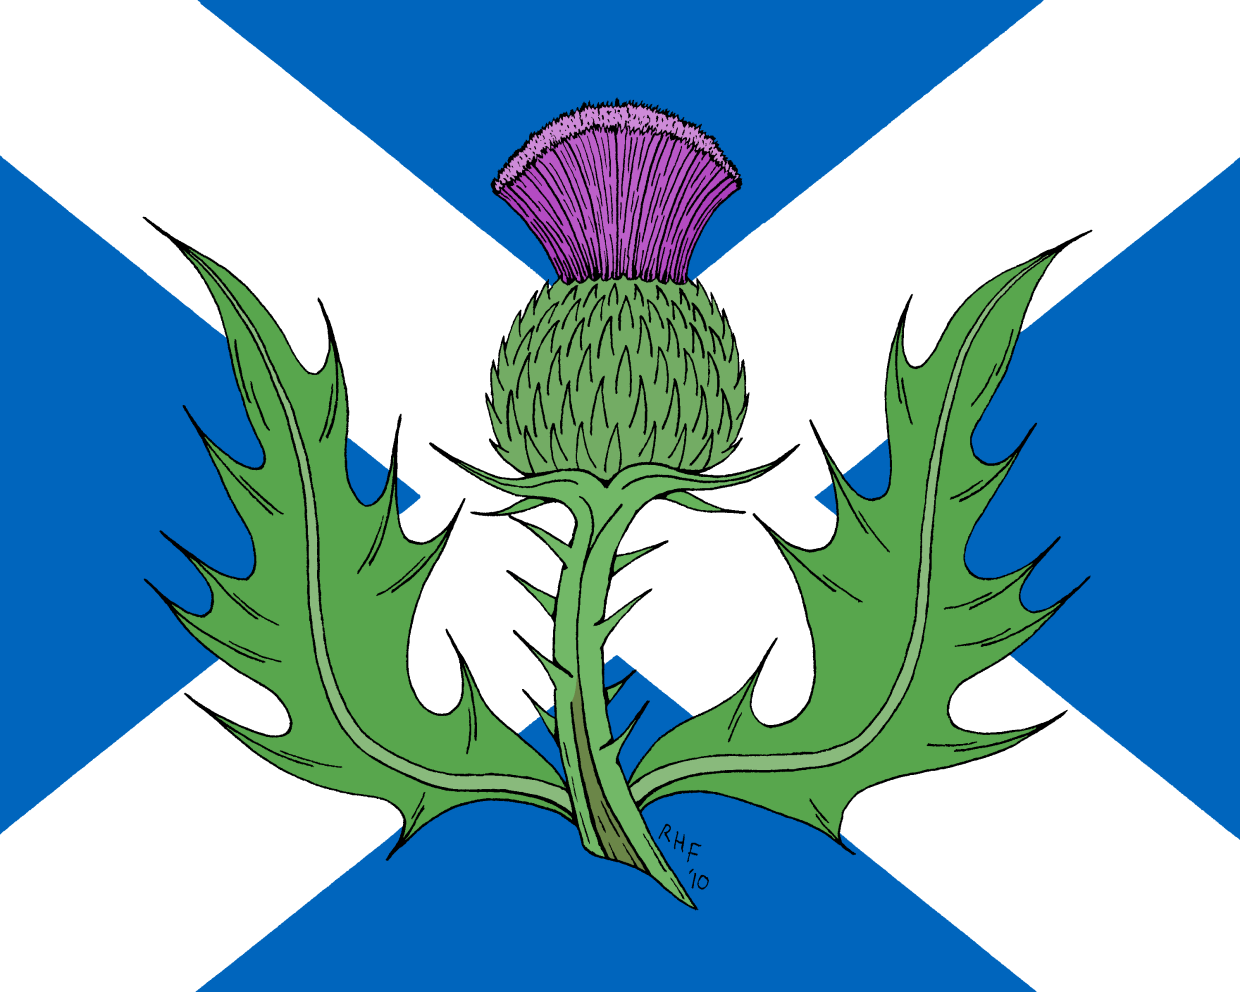 Scotland plant symbol. Цветок чертополоха символ Шотландии. Национальный символ Шотландии чертополох. Thistle символ Шотландии. Национальный цветок Шотландии чертополох.